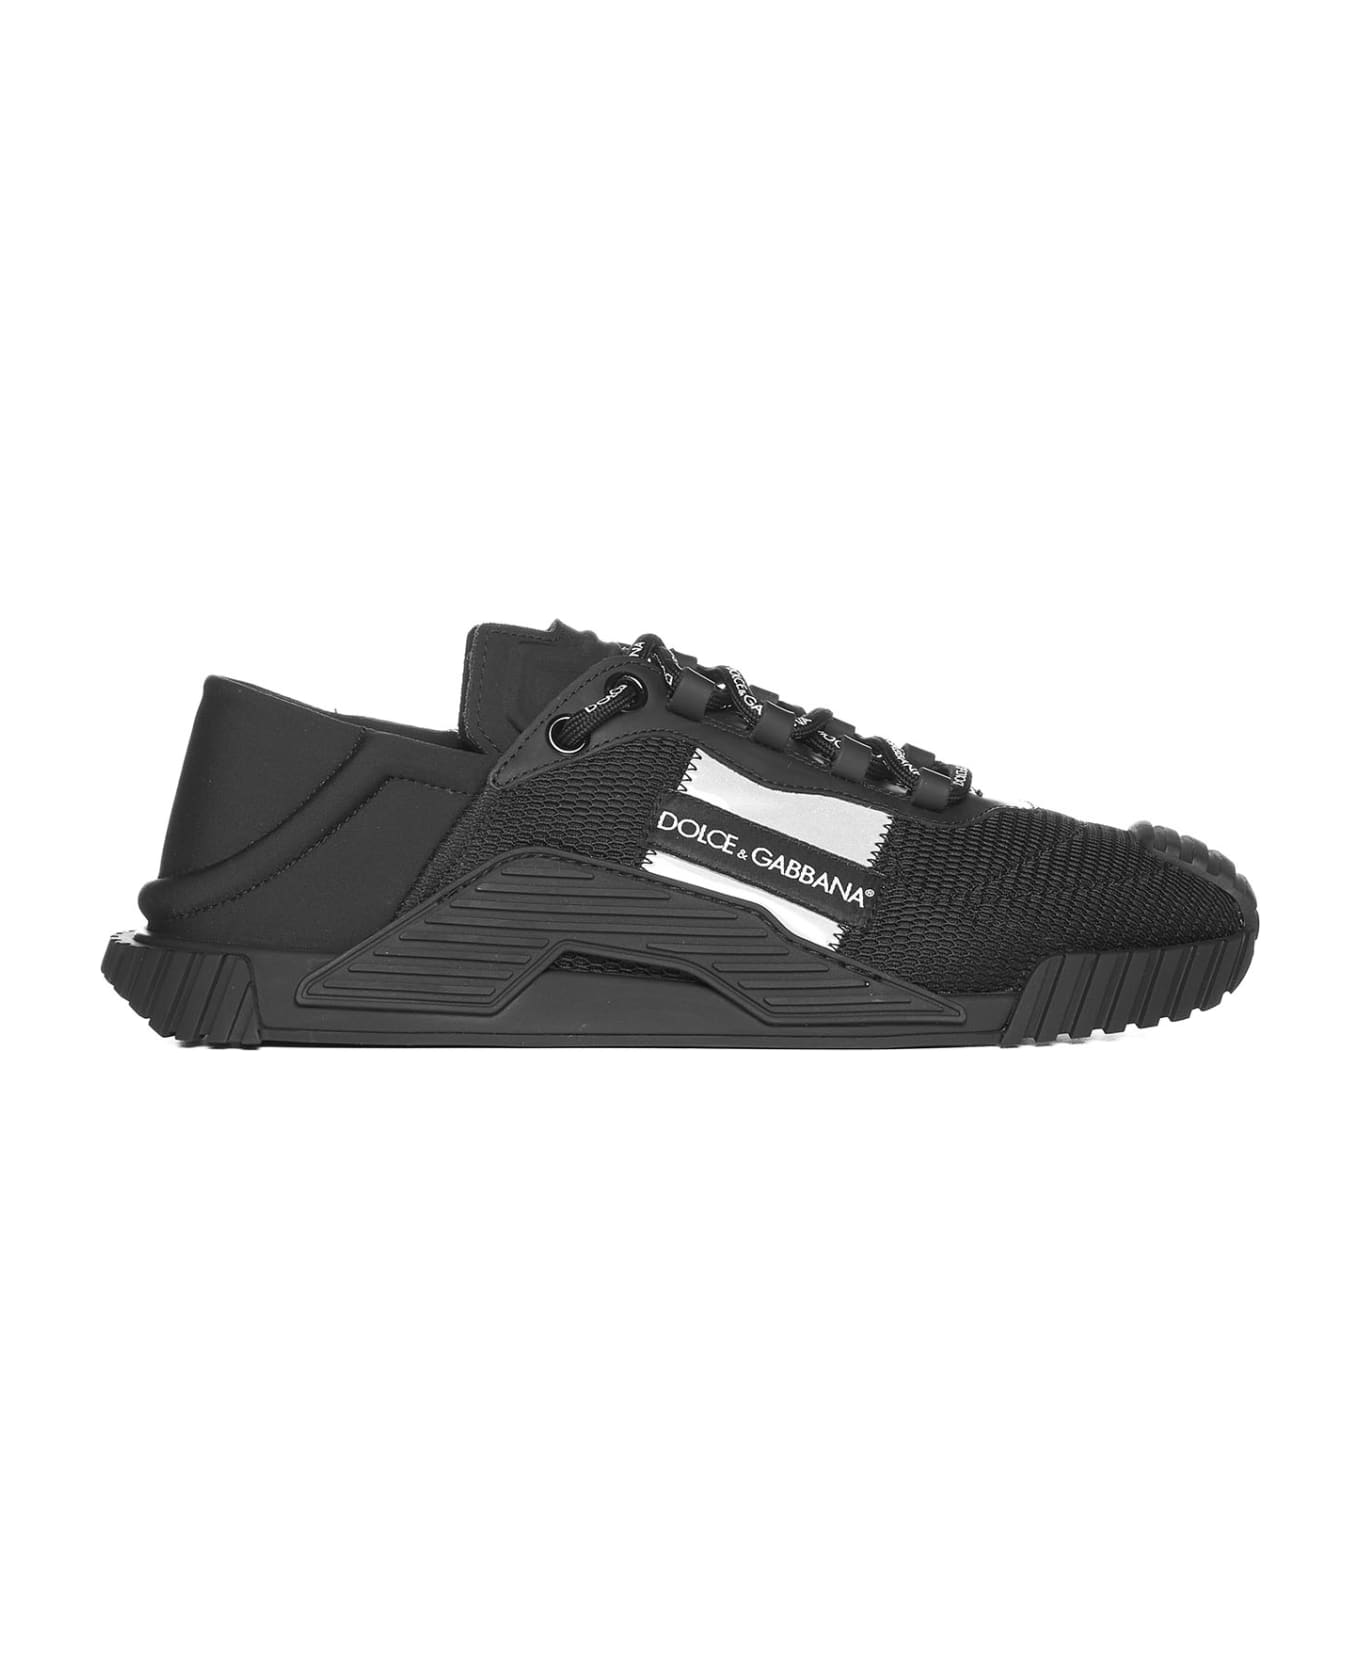 Dolce & Gabbana Nylon Blend Ns1 Sneakers - Black